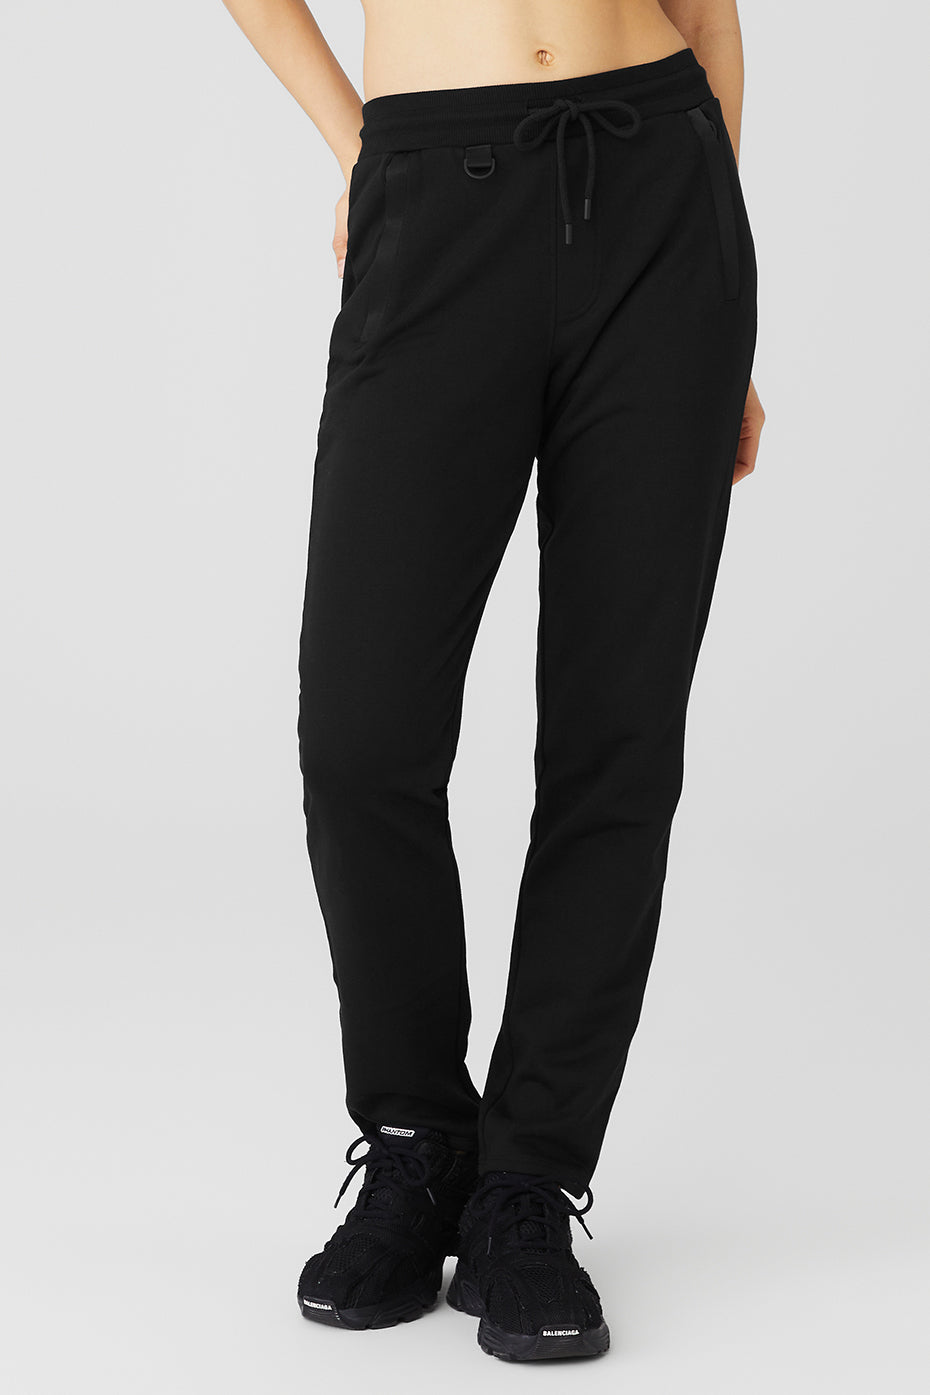 ALO Yoga Women's Propel Sweatpant Black Size Medium 7glq for sale online